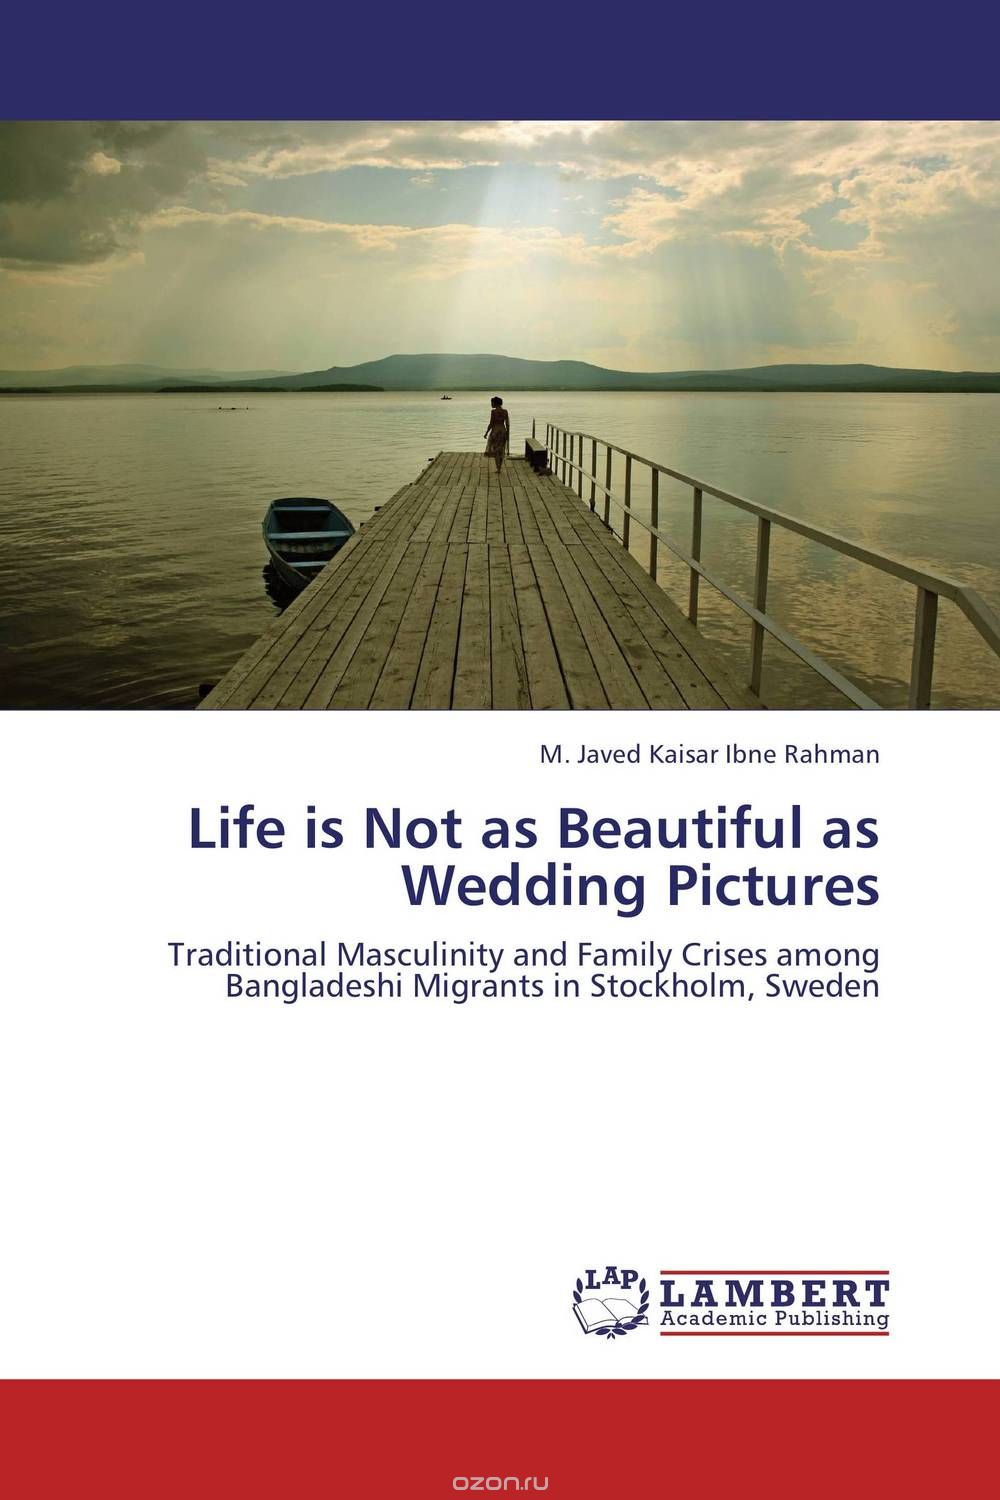 Скачать книгу "Life is Not as Beautiful as Wedding Pictures"